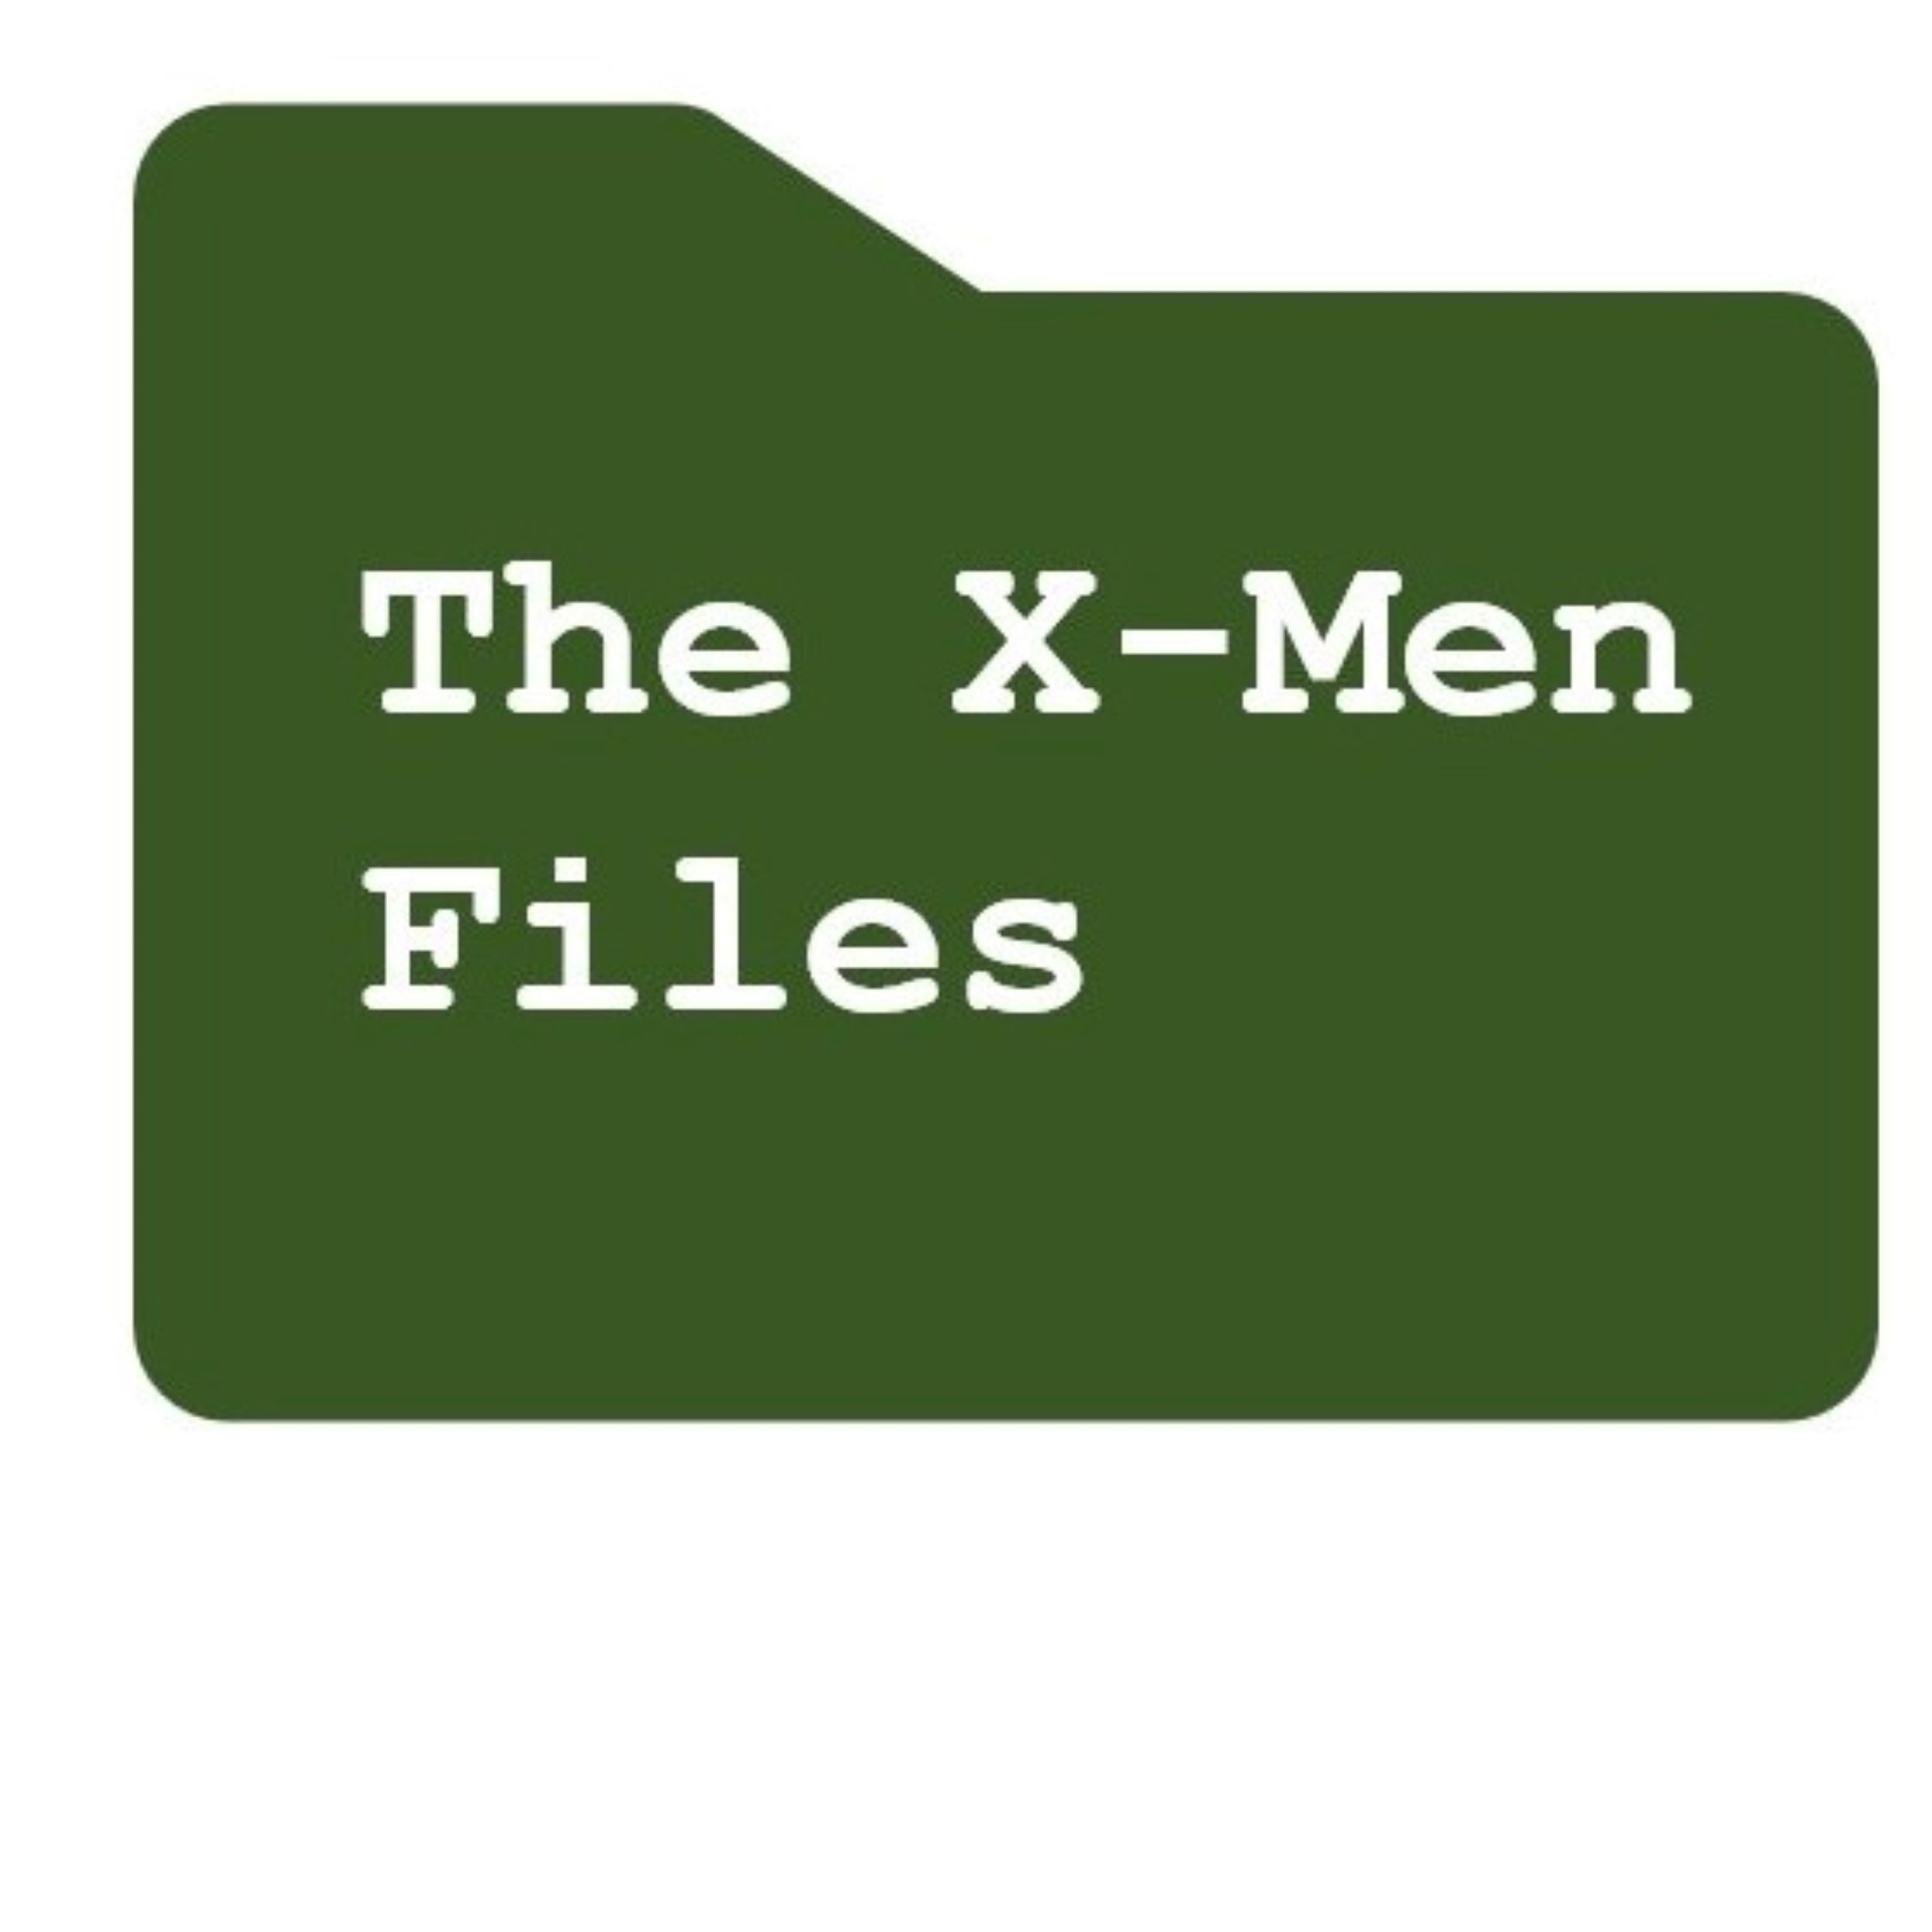 The X-Men Files